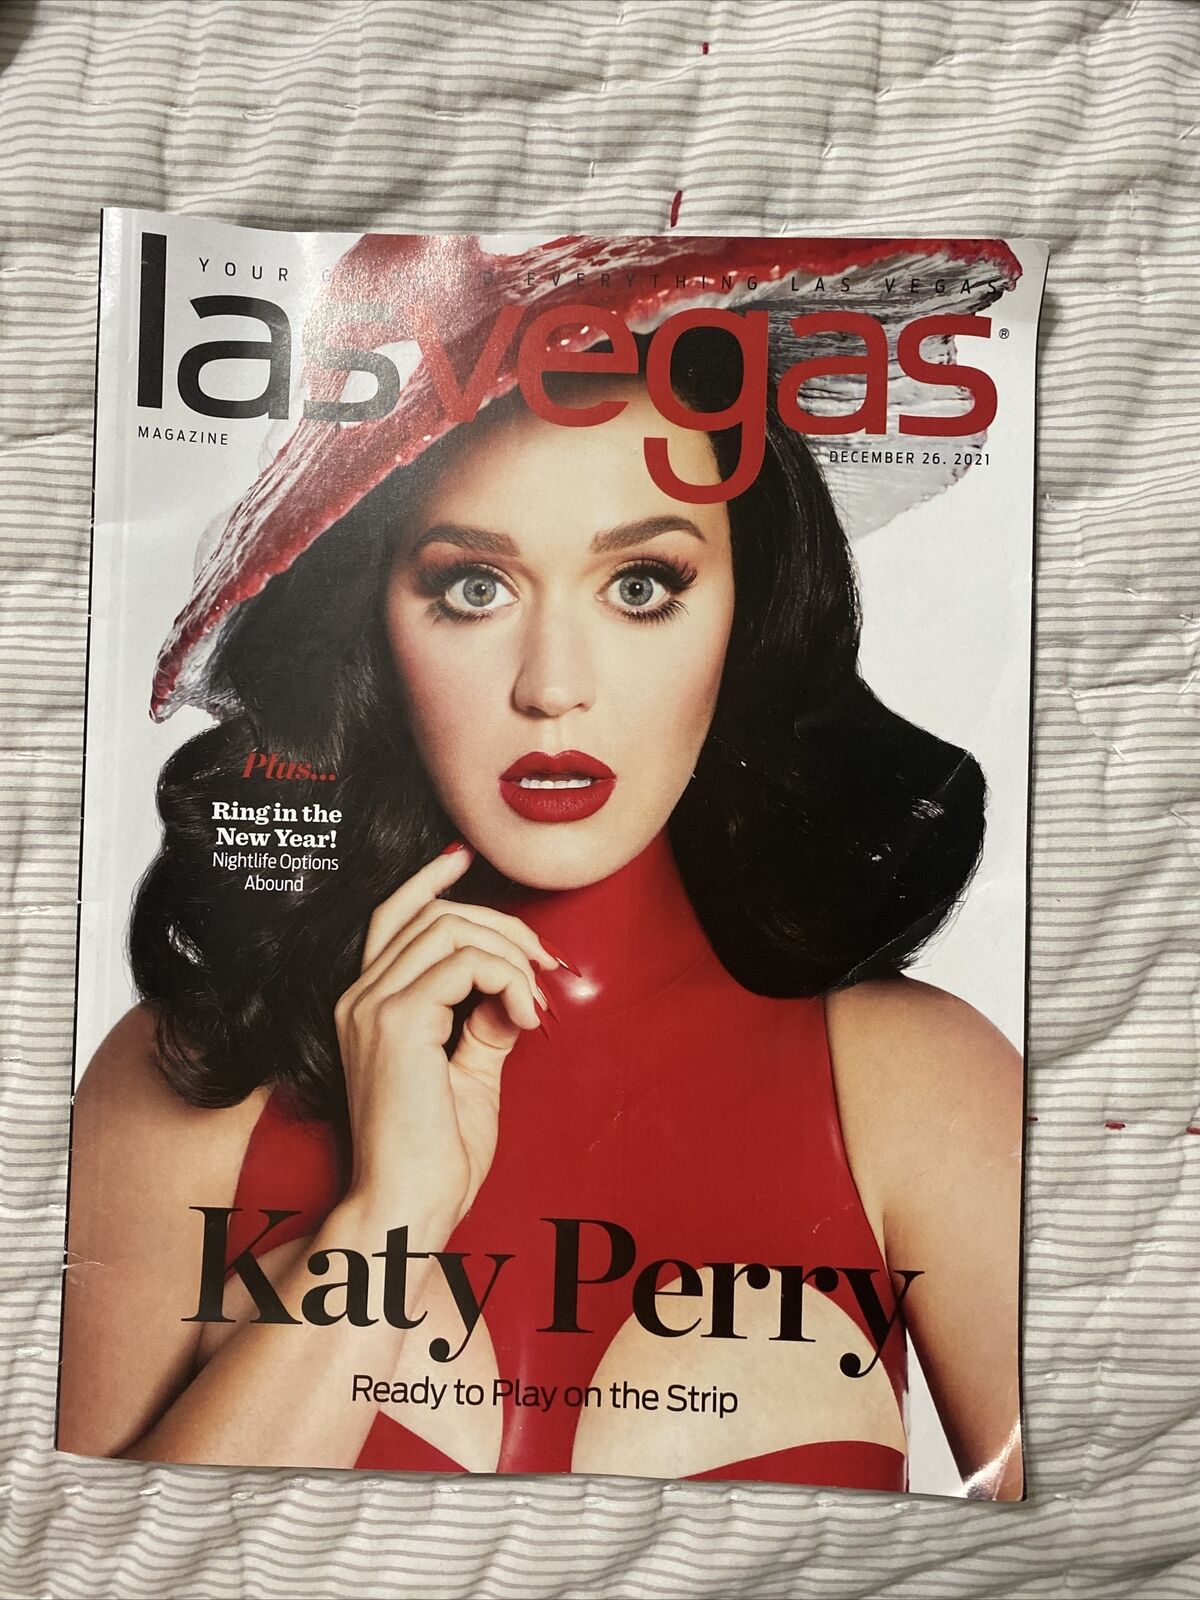 Las Vegas Magazine Featuring Katy Perry Bruno Mars December 26, 2021 Play Tour